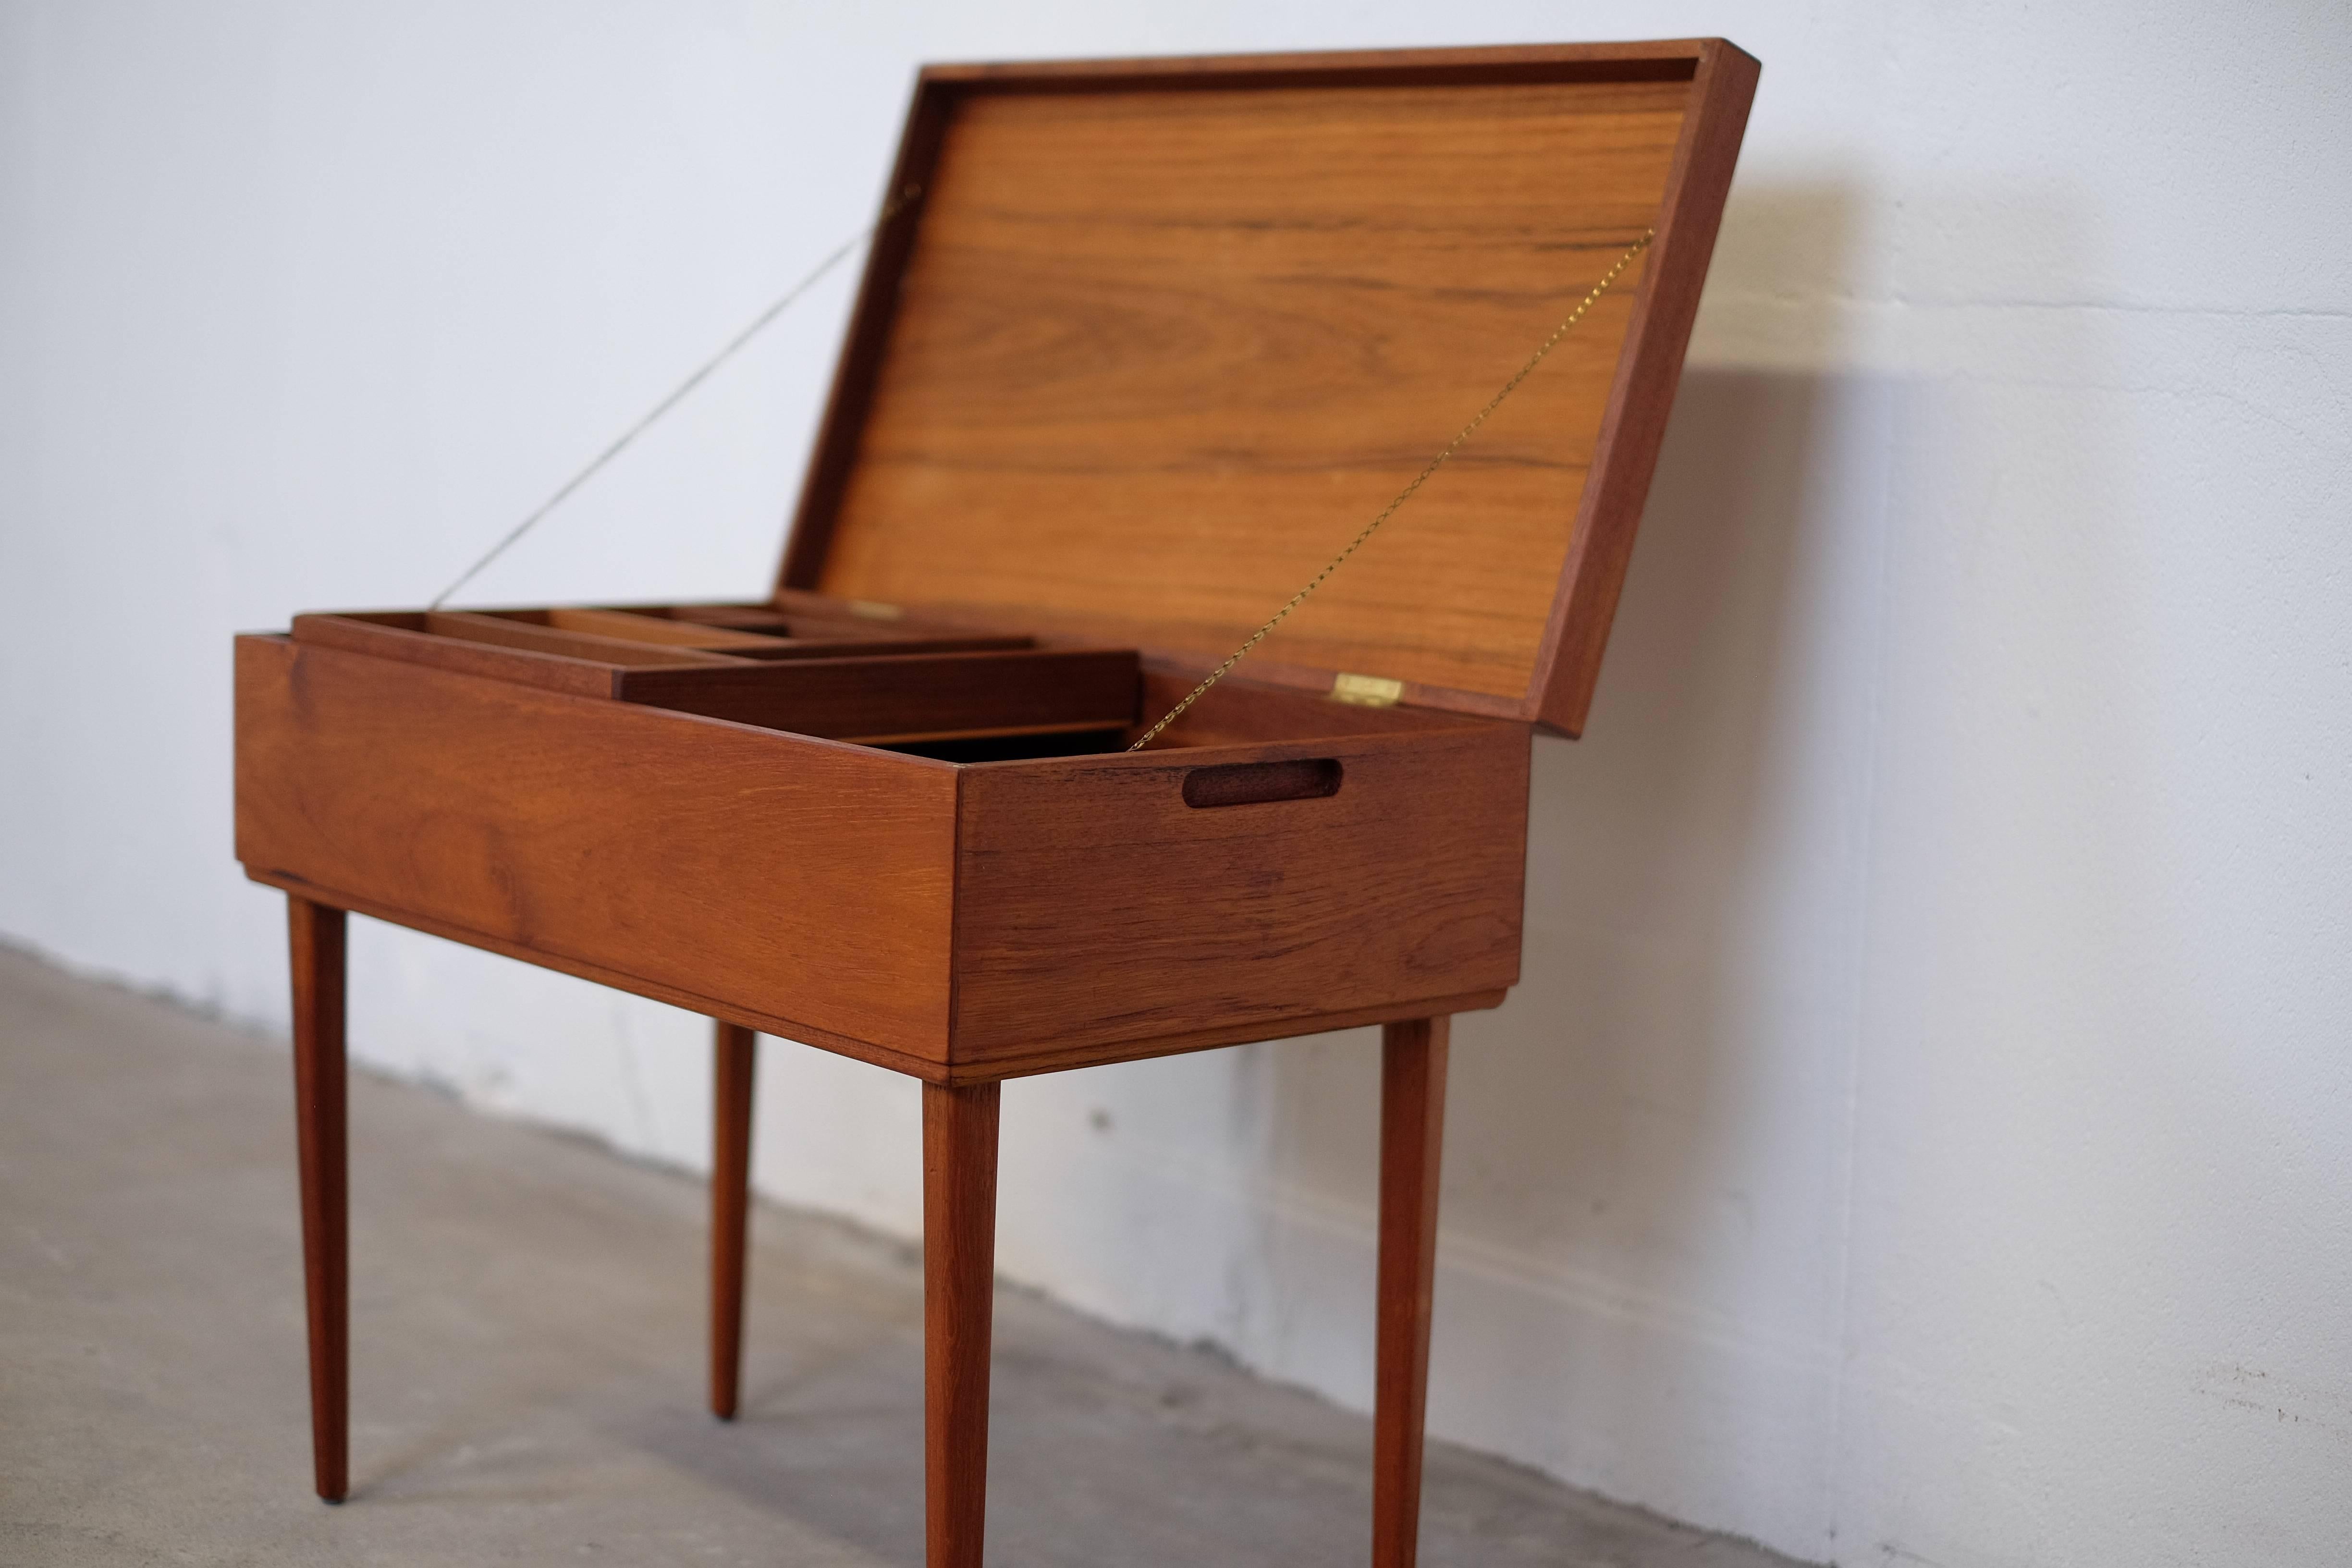 Elegant Sewing Table in Teak, Danish Design 1